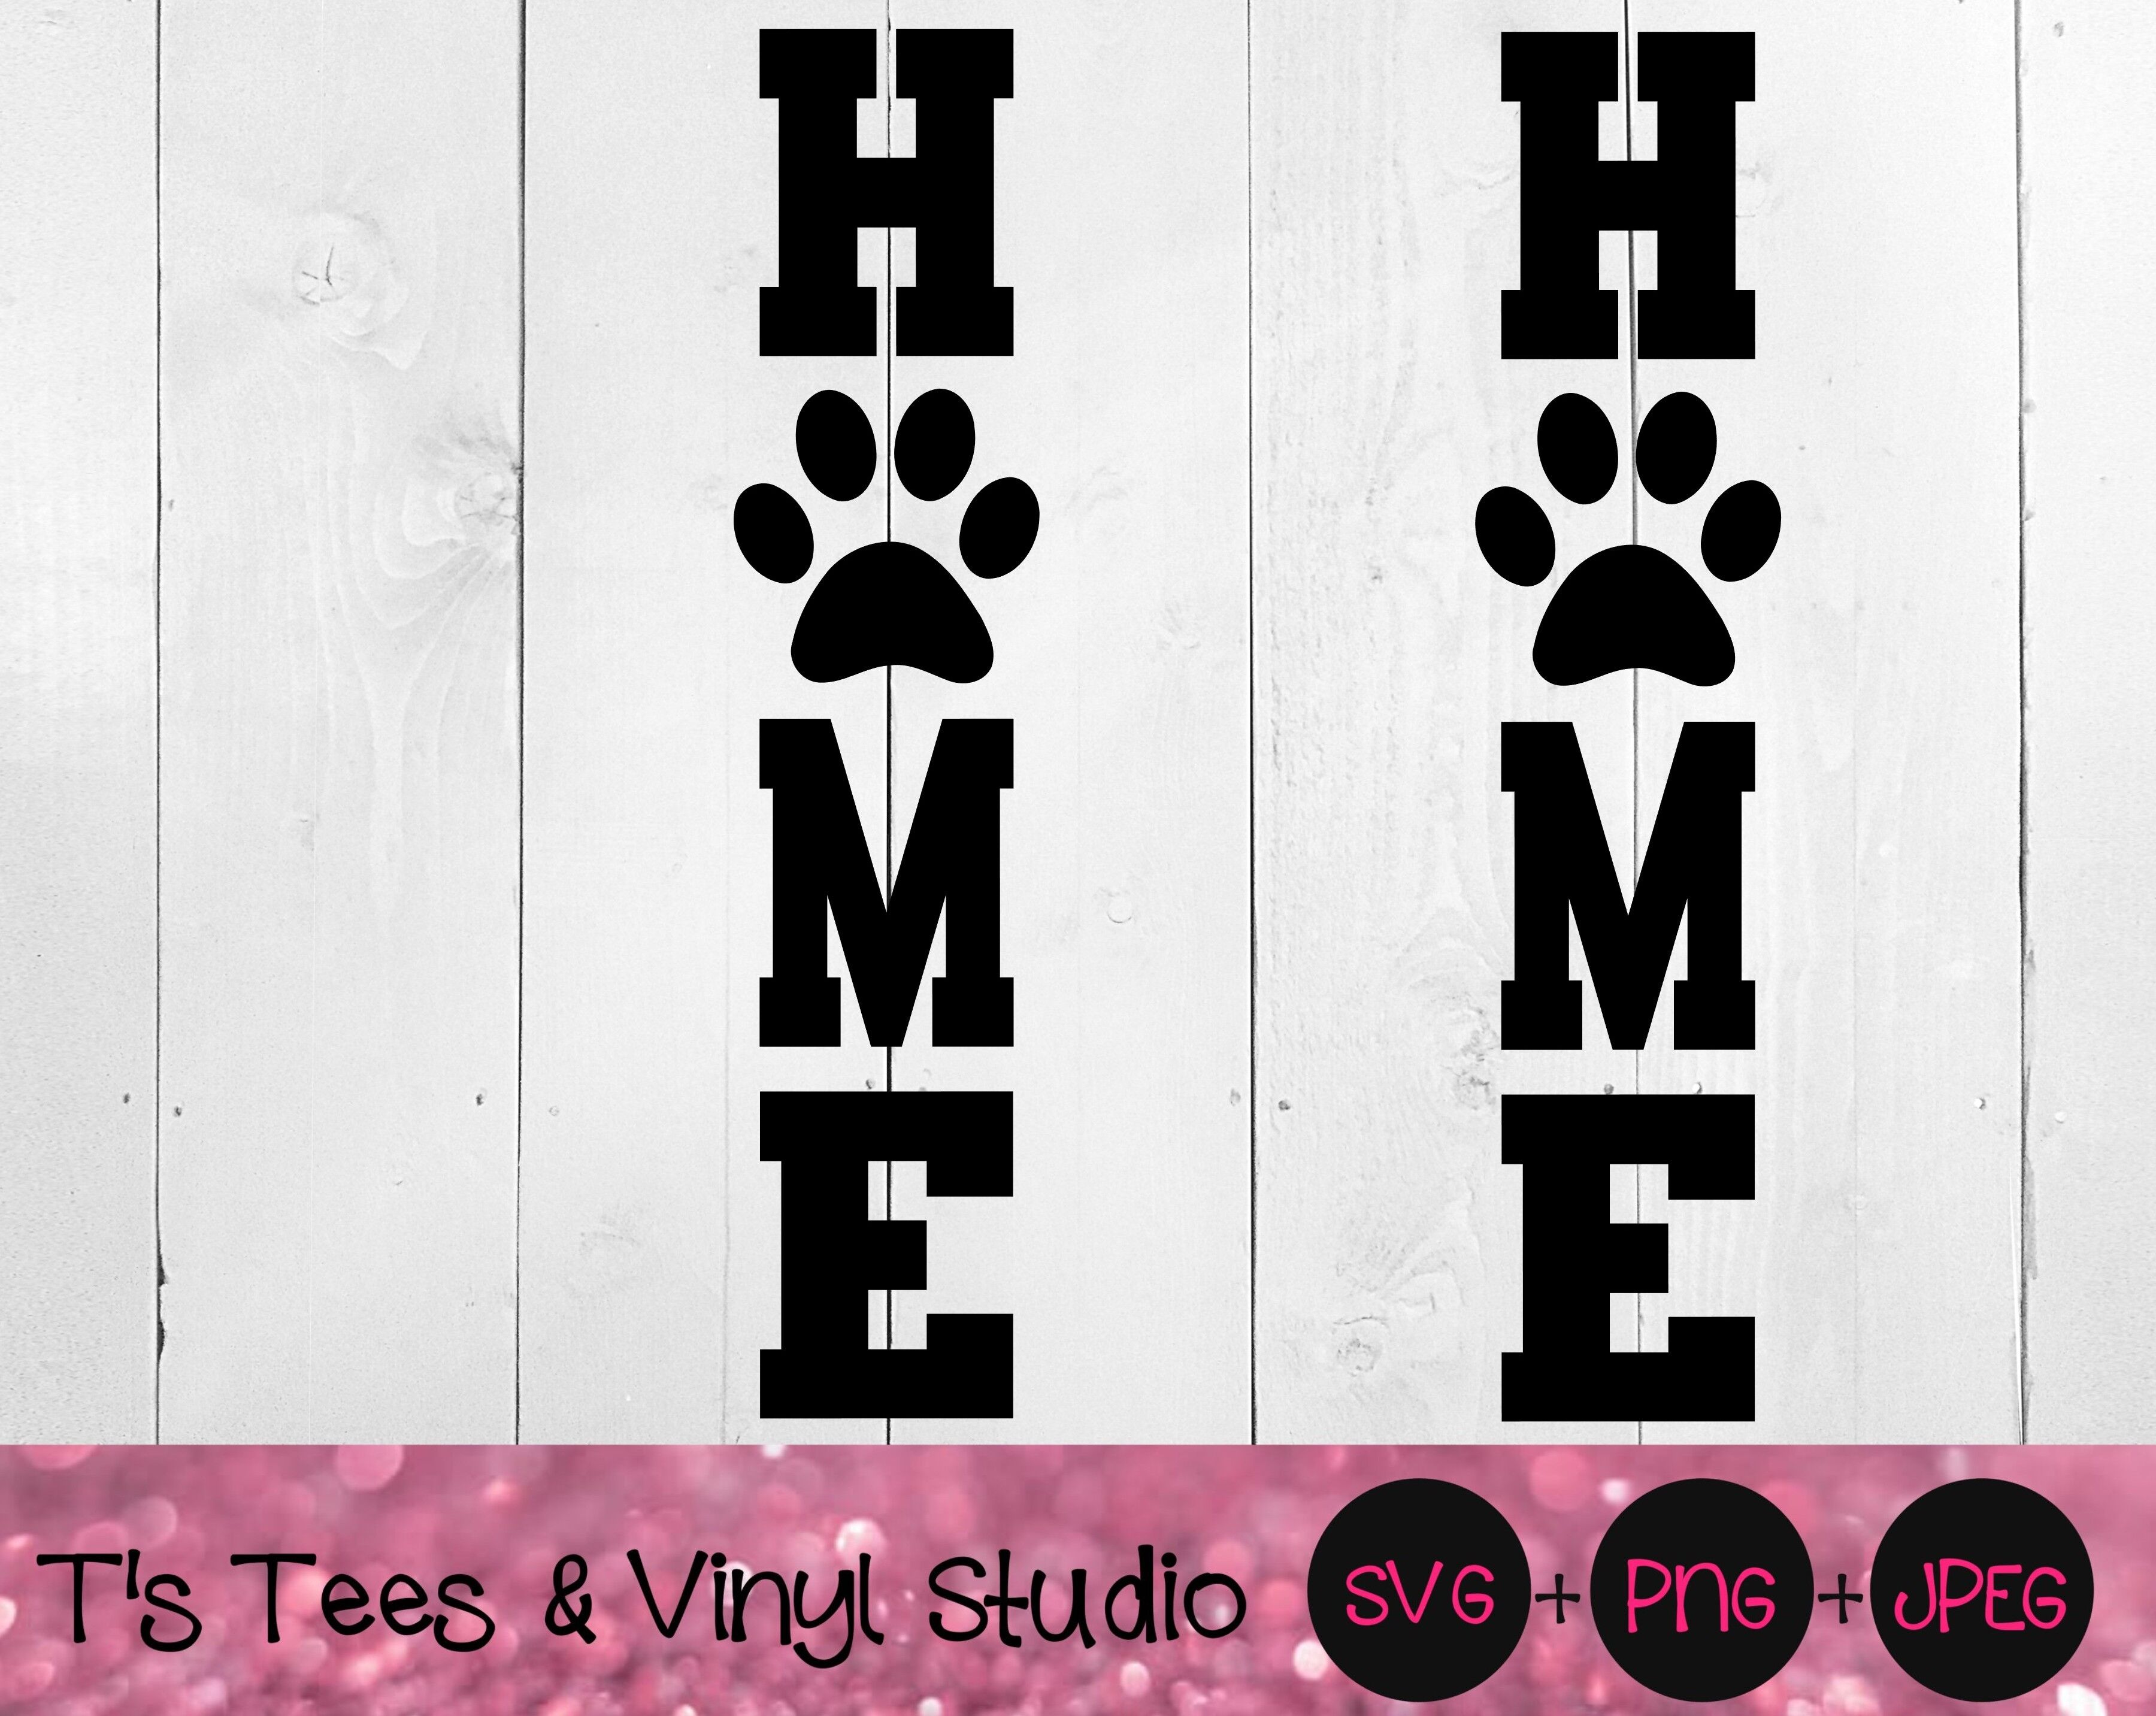 Download Dog Svg Paw Svg Paw Print Svg Home Svg Welcome Svg Porch Sign Svg By T S Tees Vinyl Studio Thehungryjpeg Com SVG, PNG, EPS, DXF File